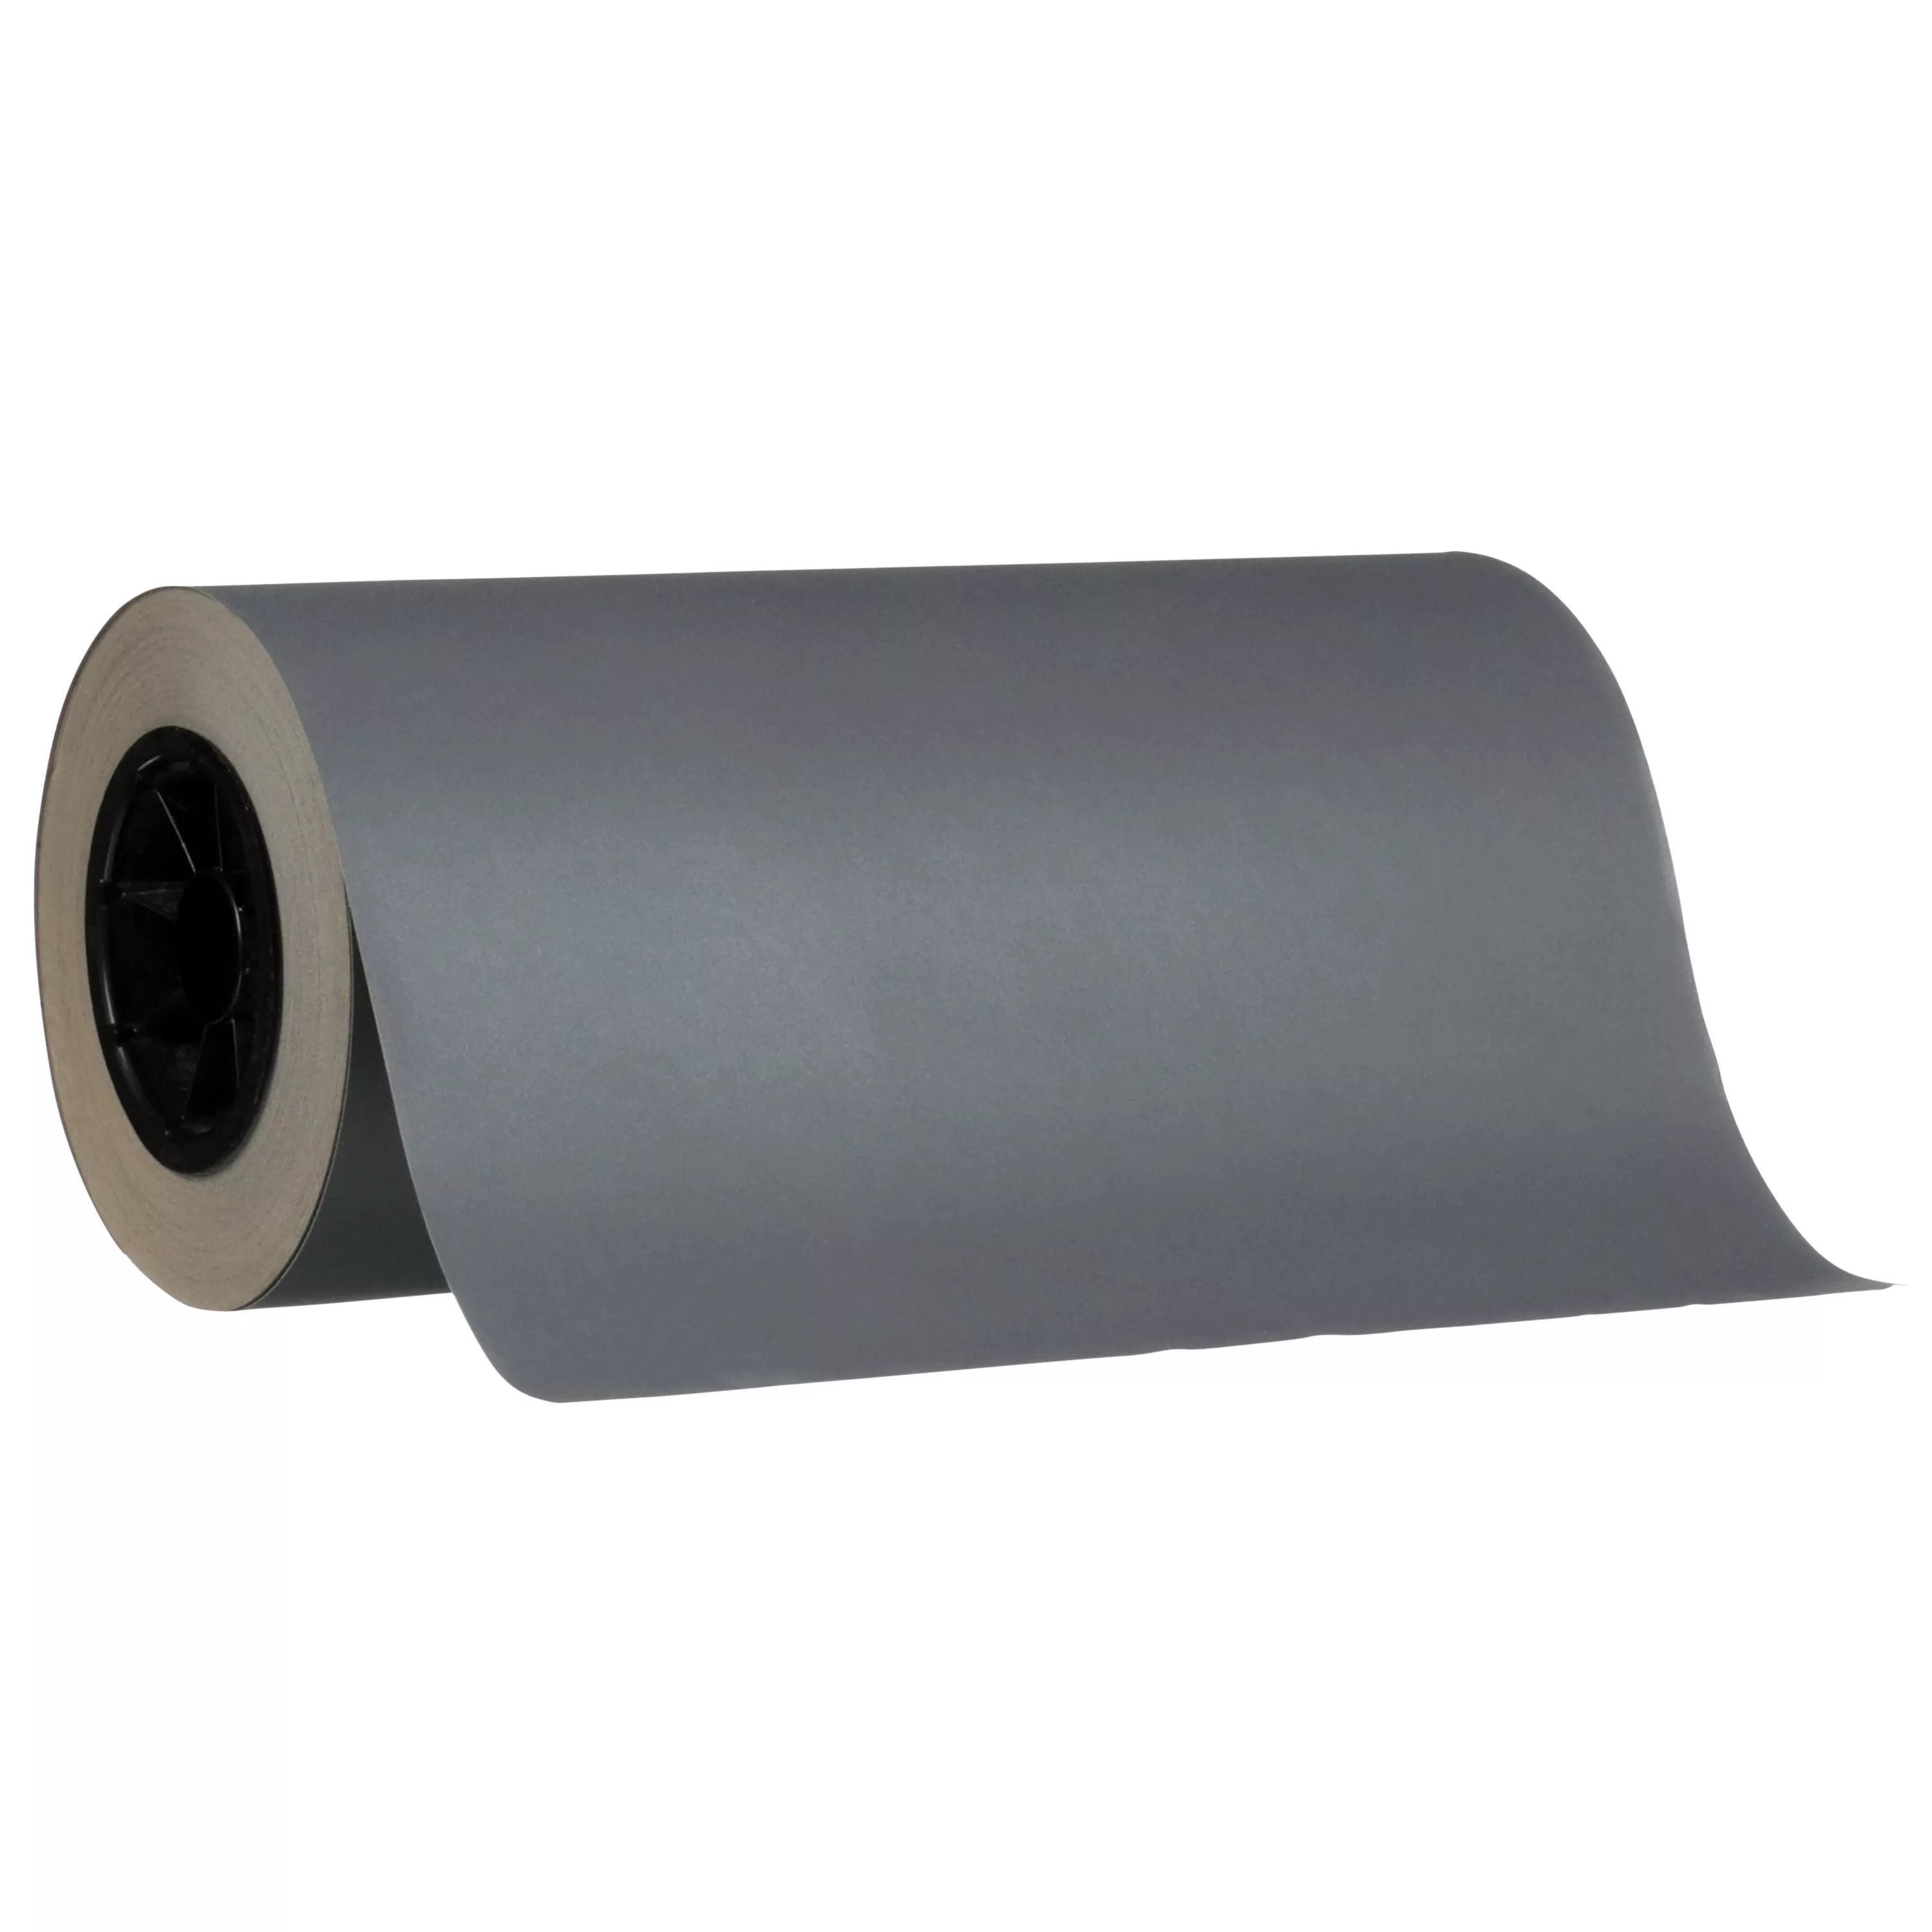 3M™ Wetordry™ Paper Roll 413Q, 12 in x 50 yd, 320 A weight, 1 per inner
2 per case